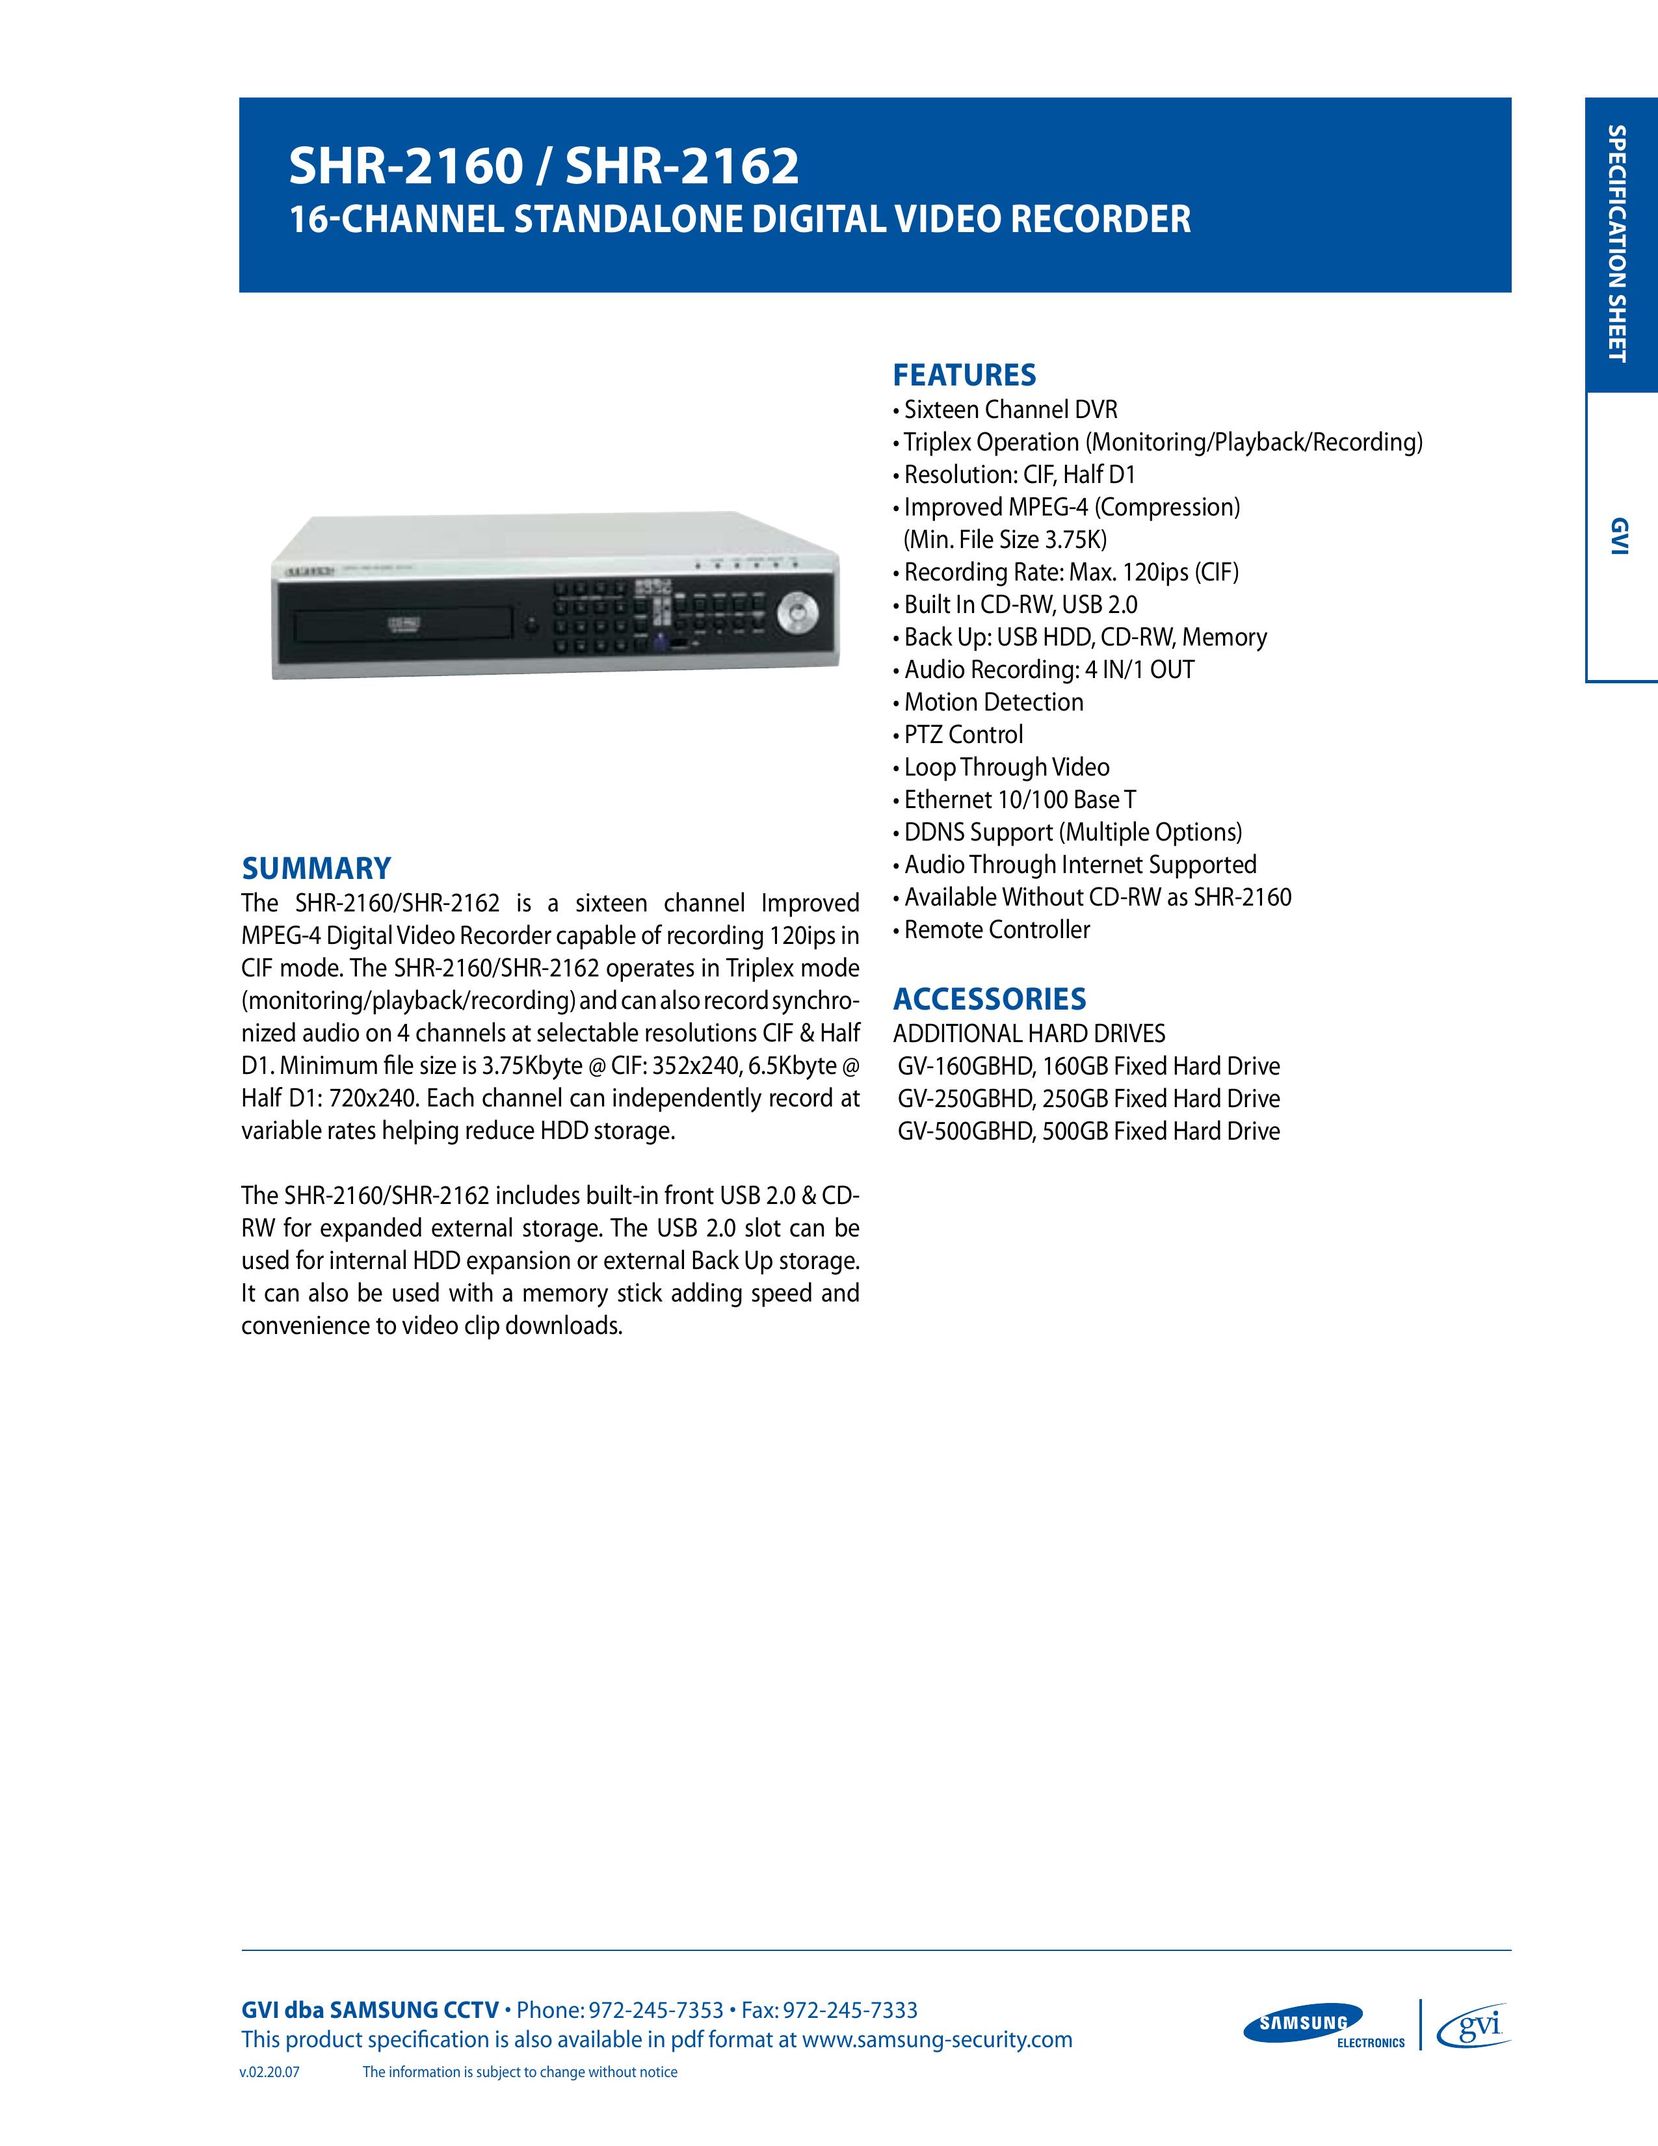 Samsung SHR-2162 DVR User Manual